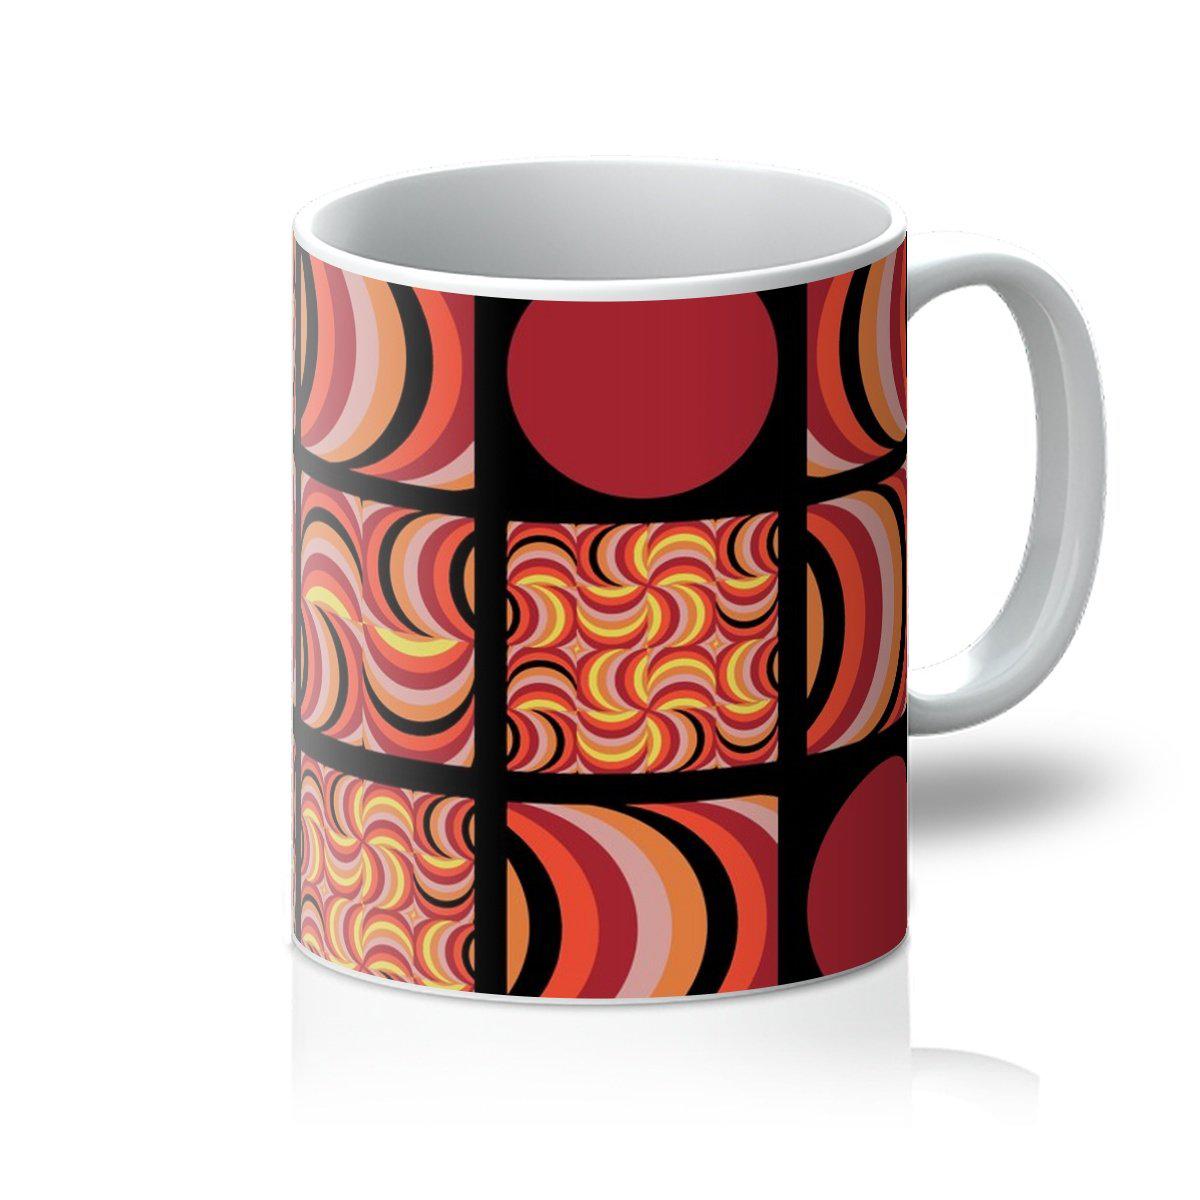  ceramic geometric patterned 70s style Retro Mandarin Black coffee mug